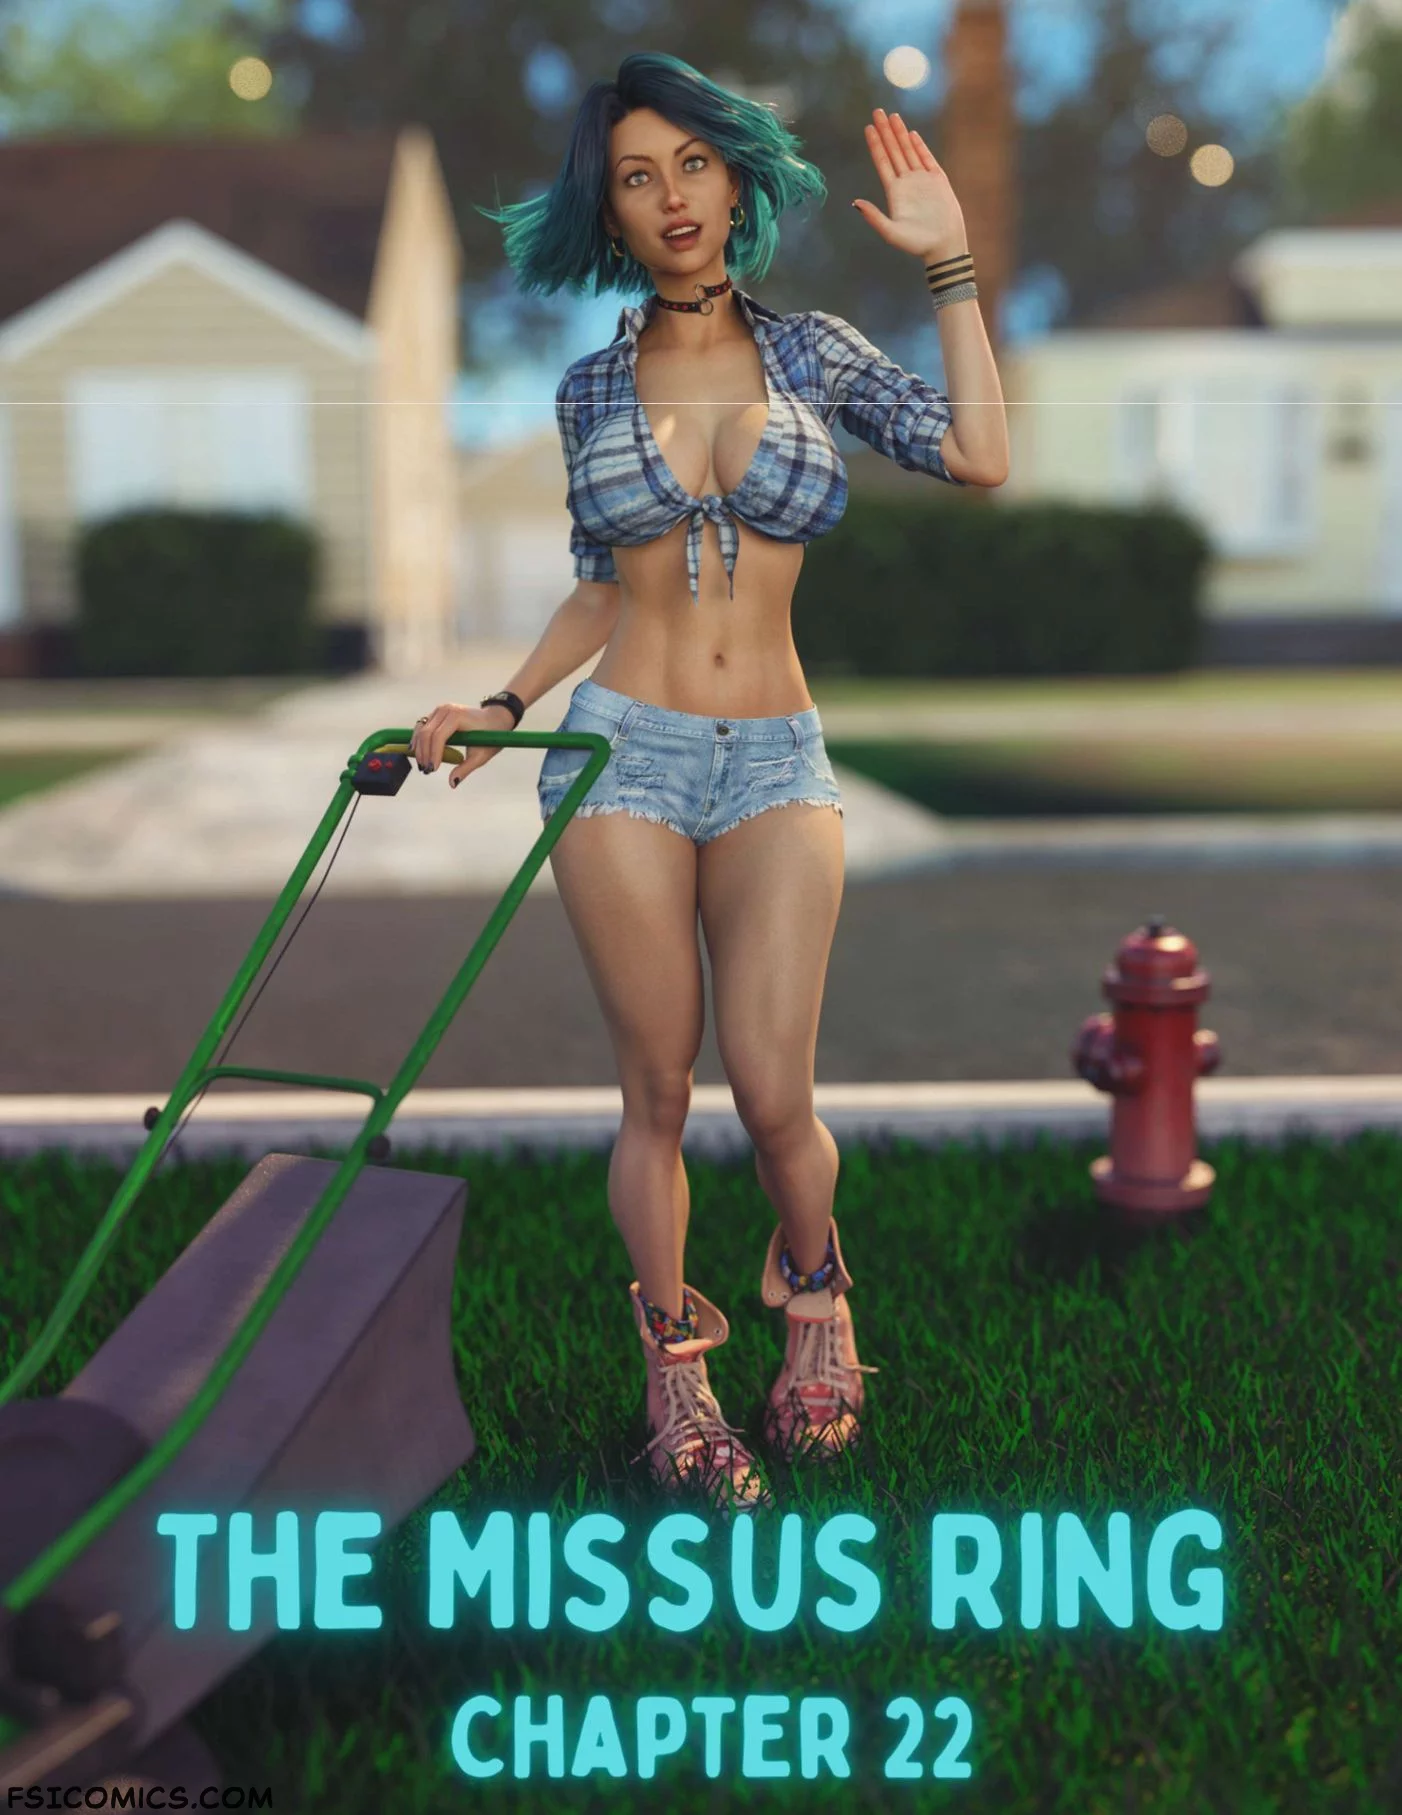 The Missus Ring Chapter 22 - Lexx228 | RawlyRawls - 11 - FSIComics